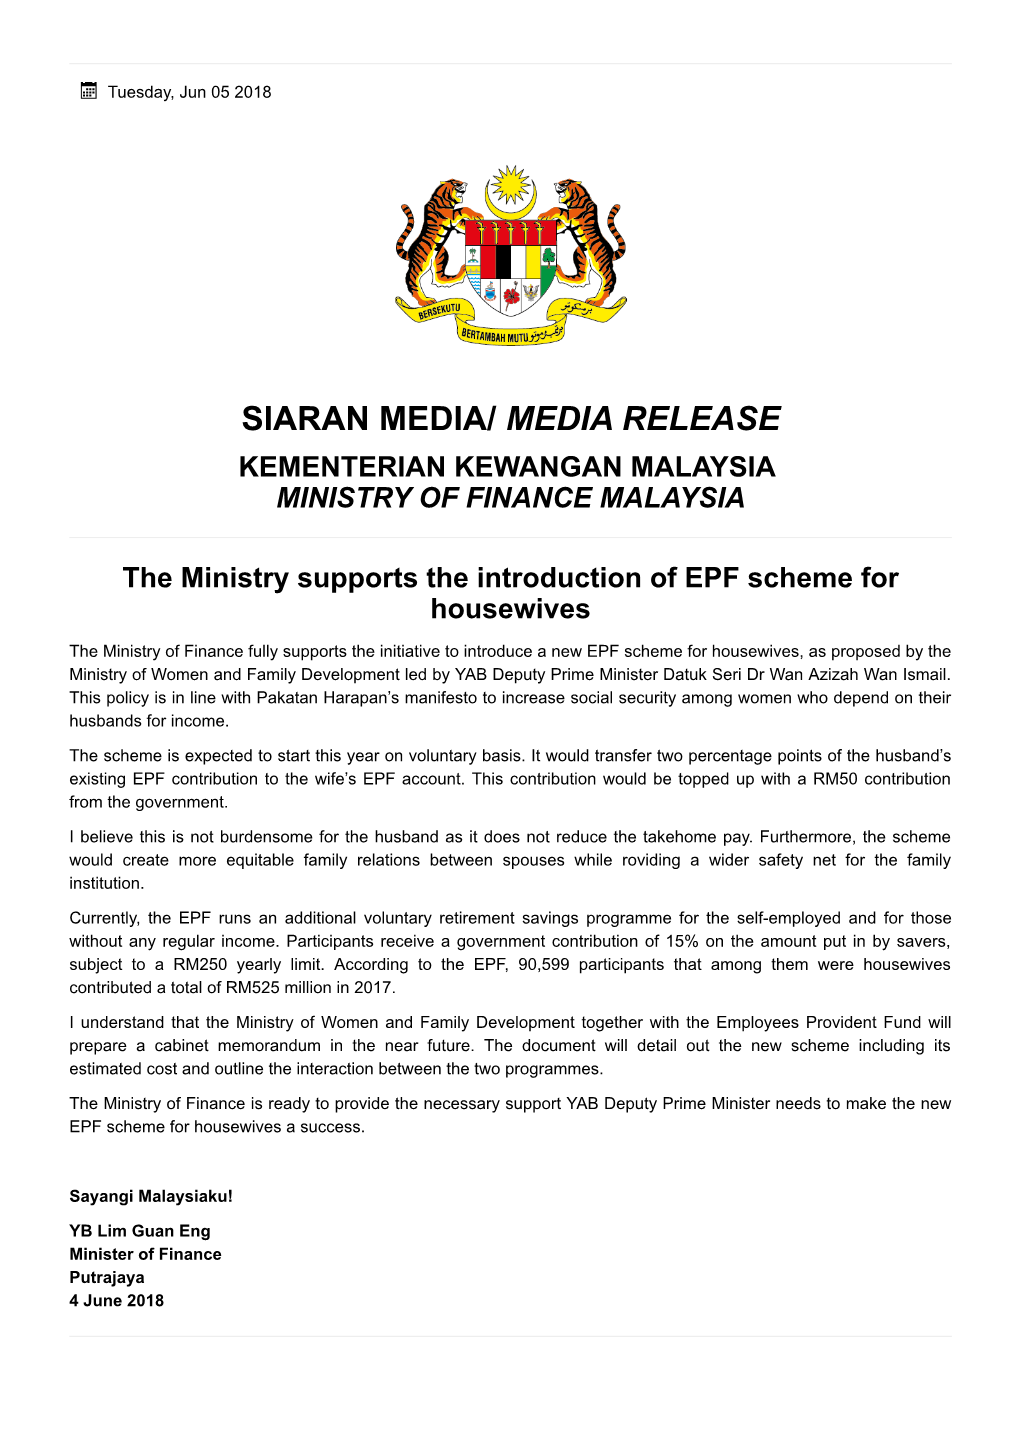 Media Release Kementerian Kewangan Malaysia Ministry of Finance Malaysia